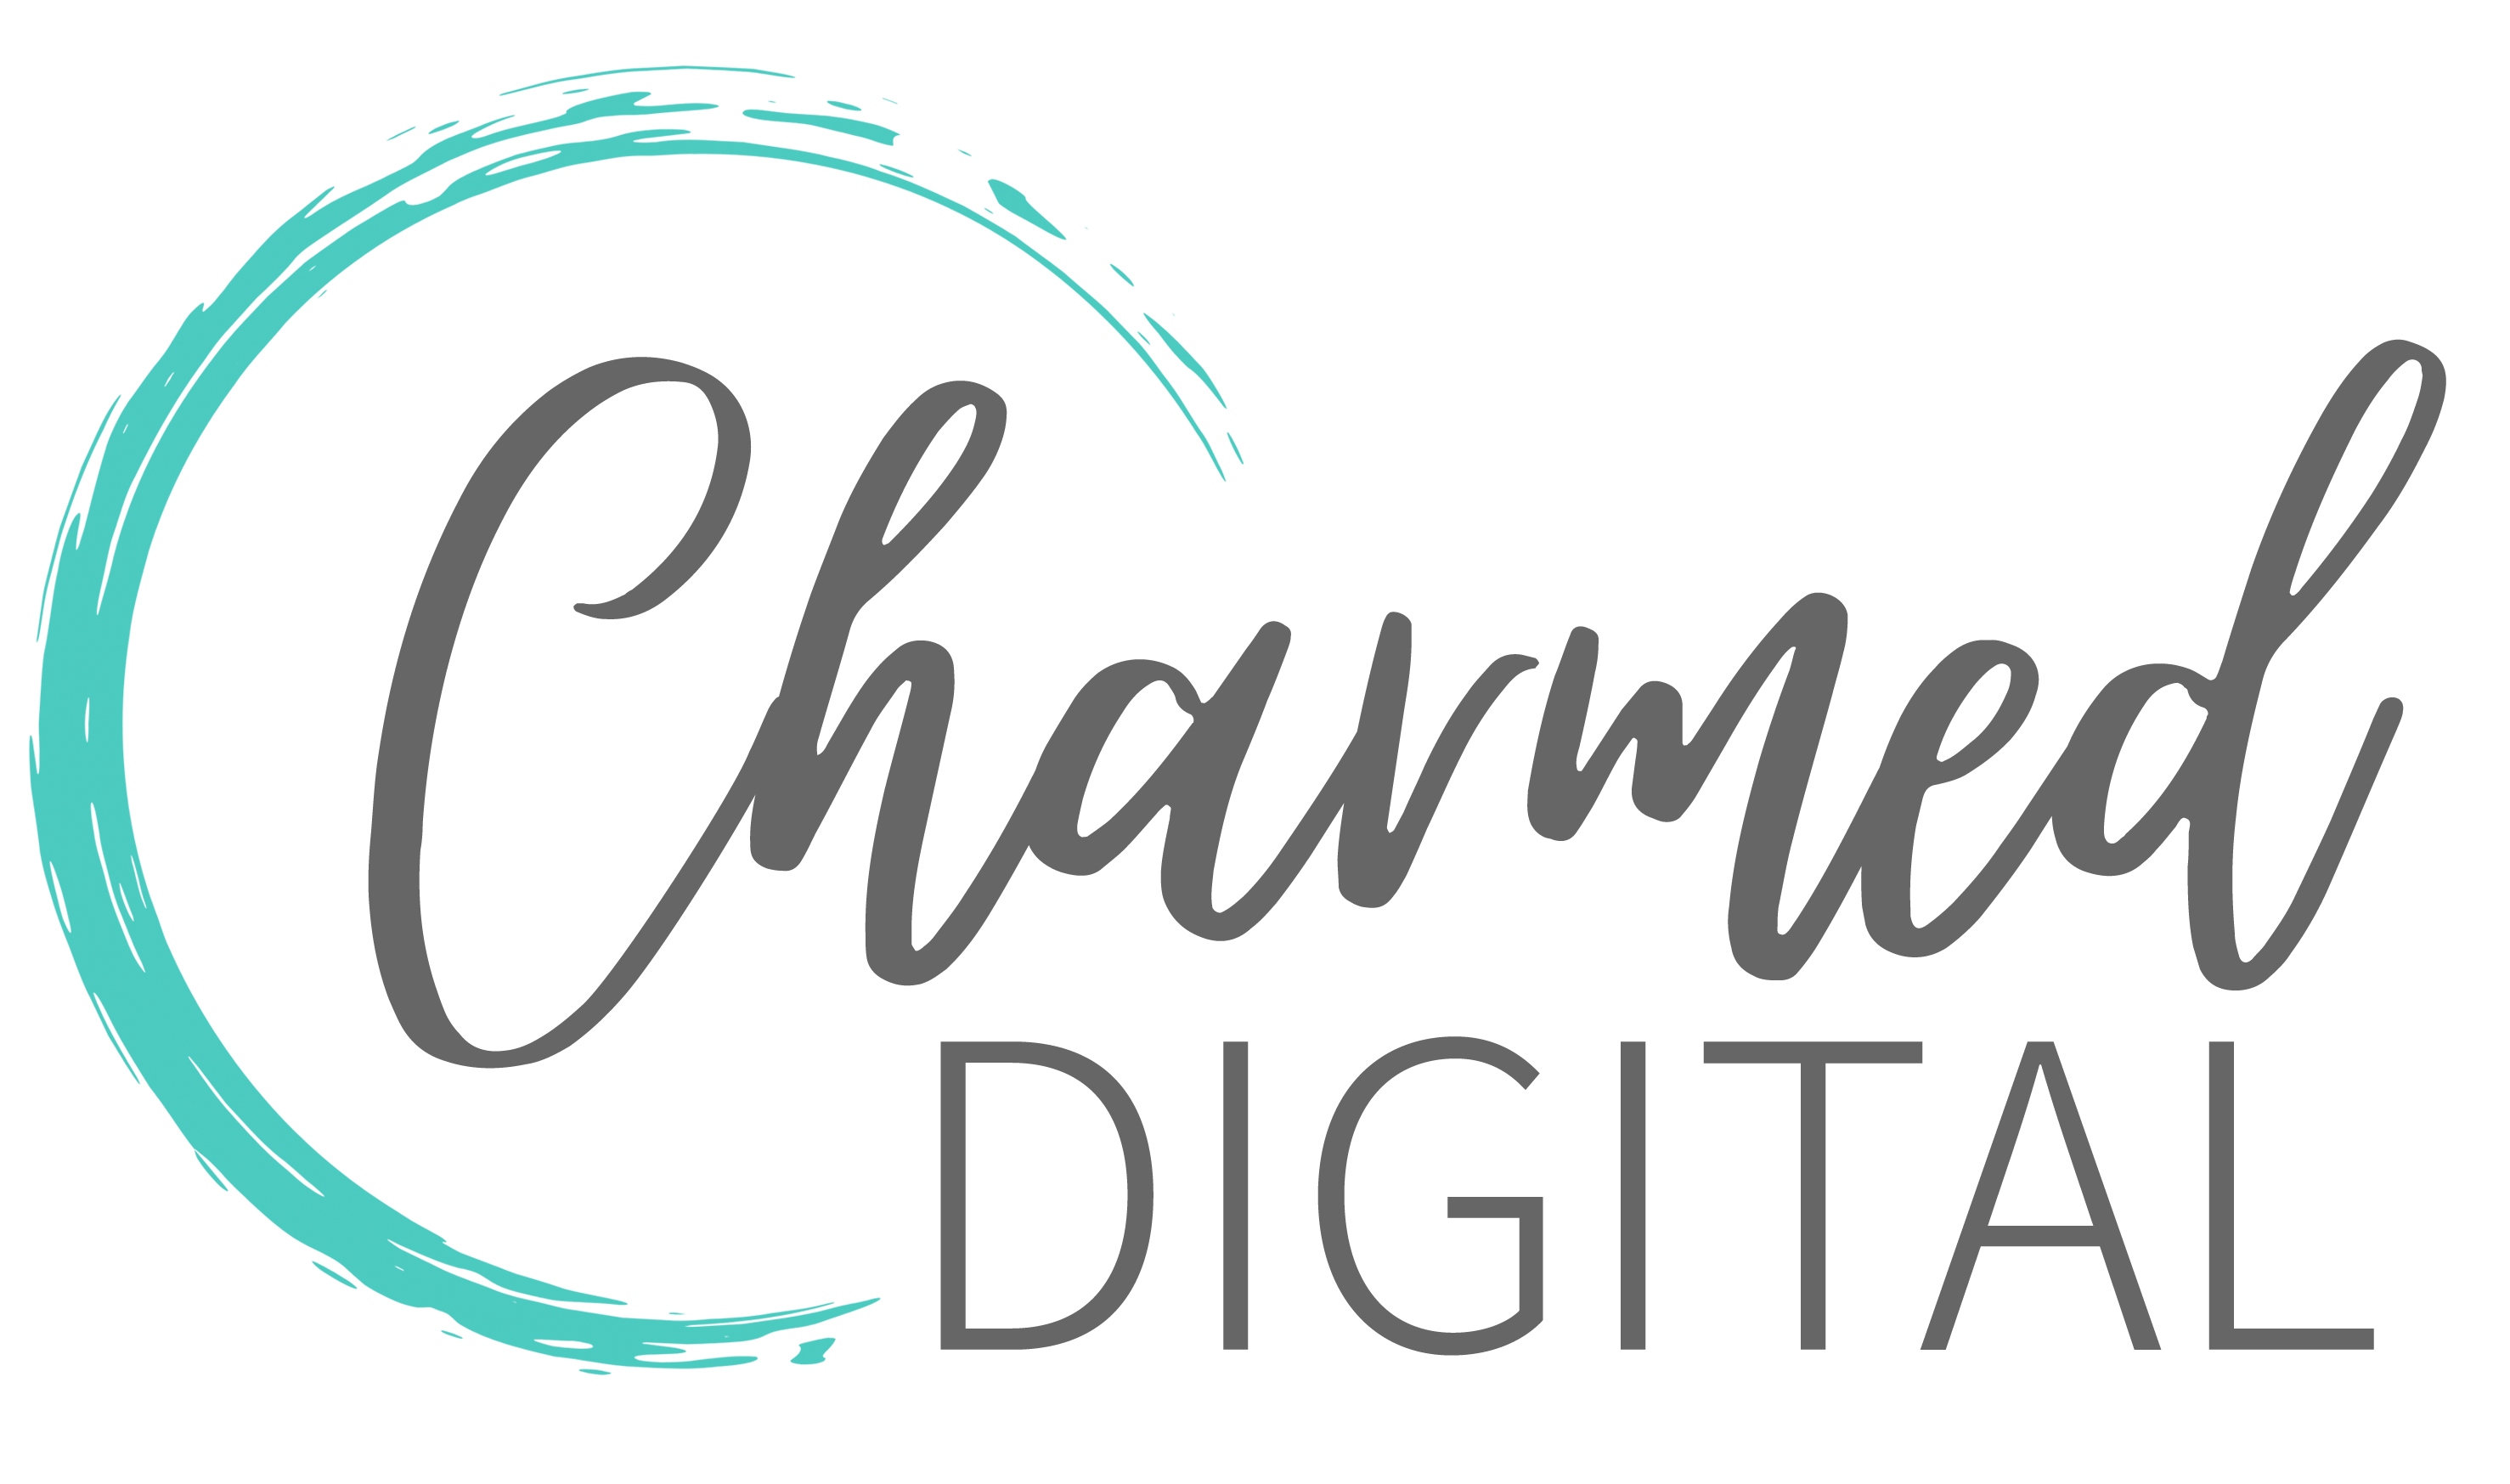 Charmed Digital